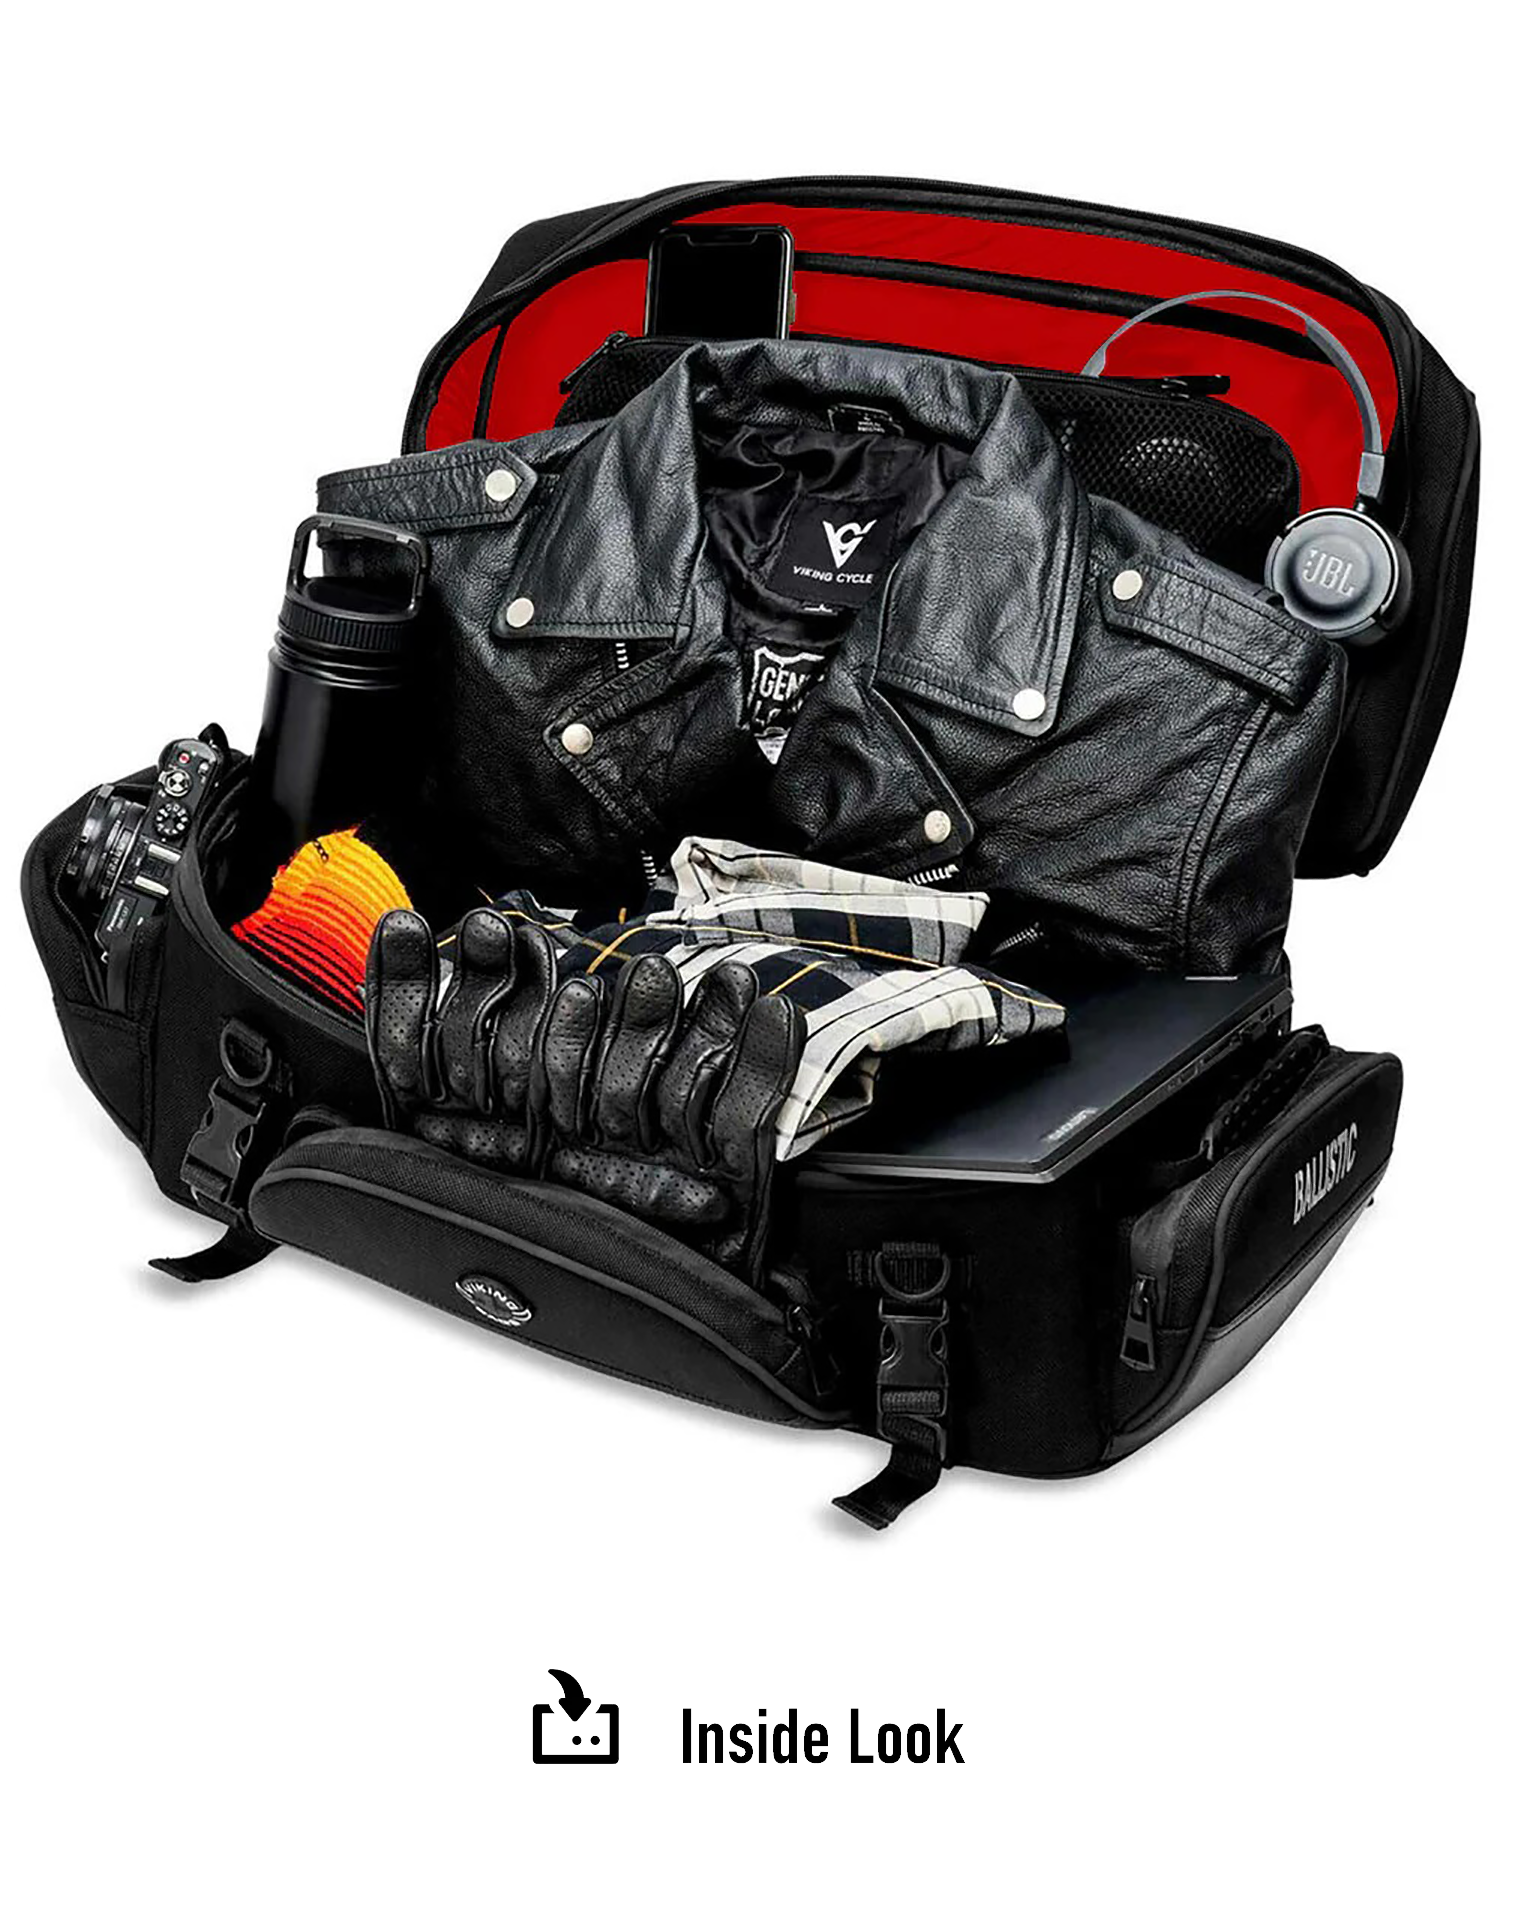 42L - Voyage Elite XL Triumph Motorcycle Luggage Rack Bag